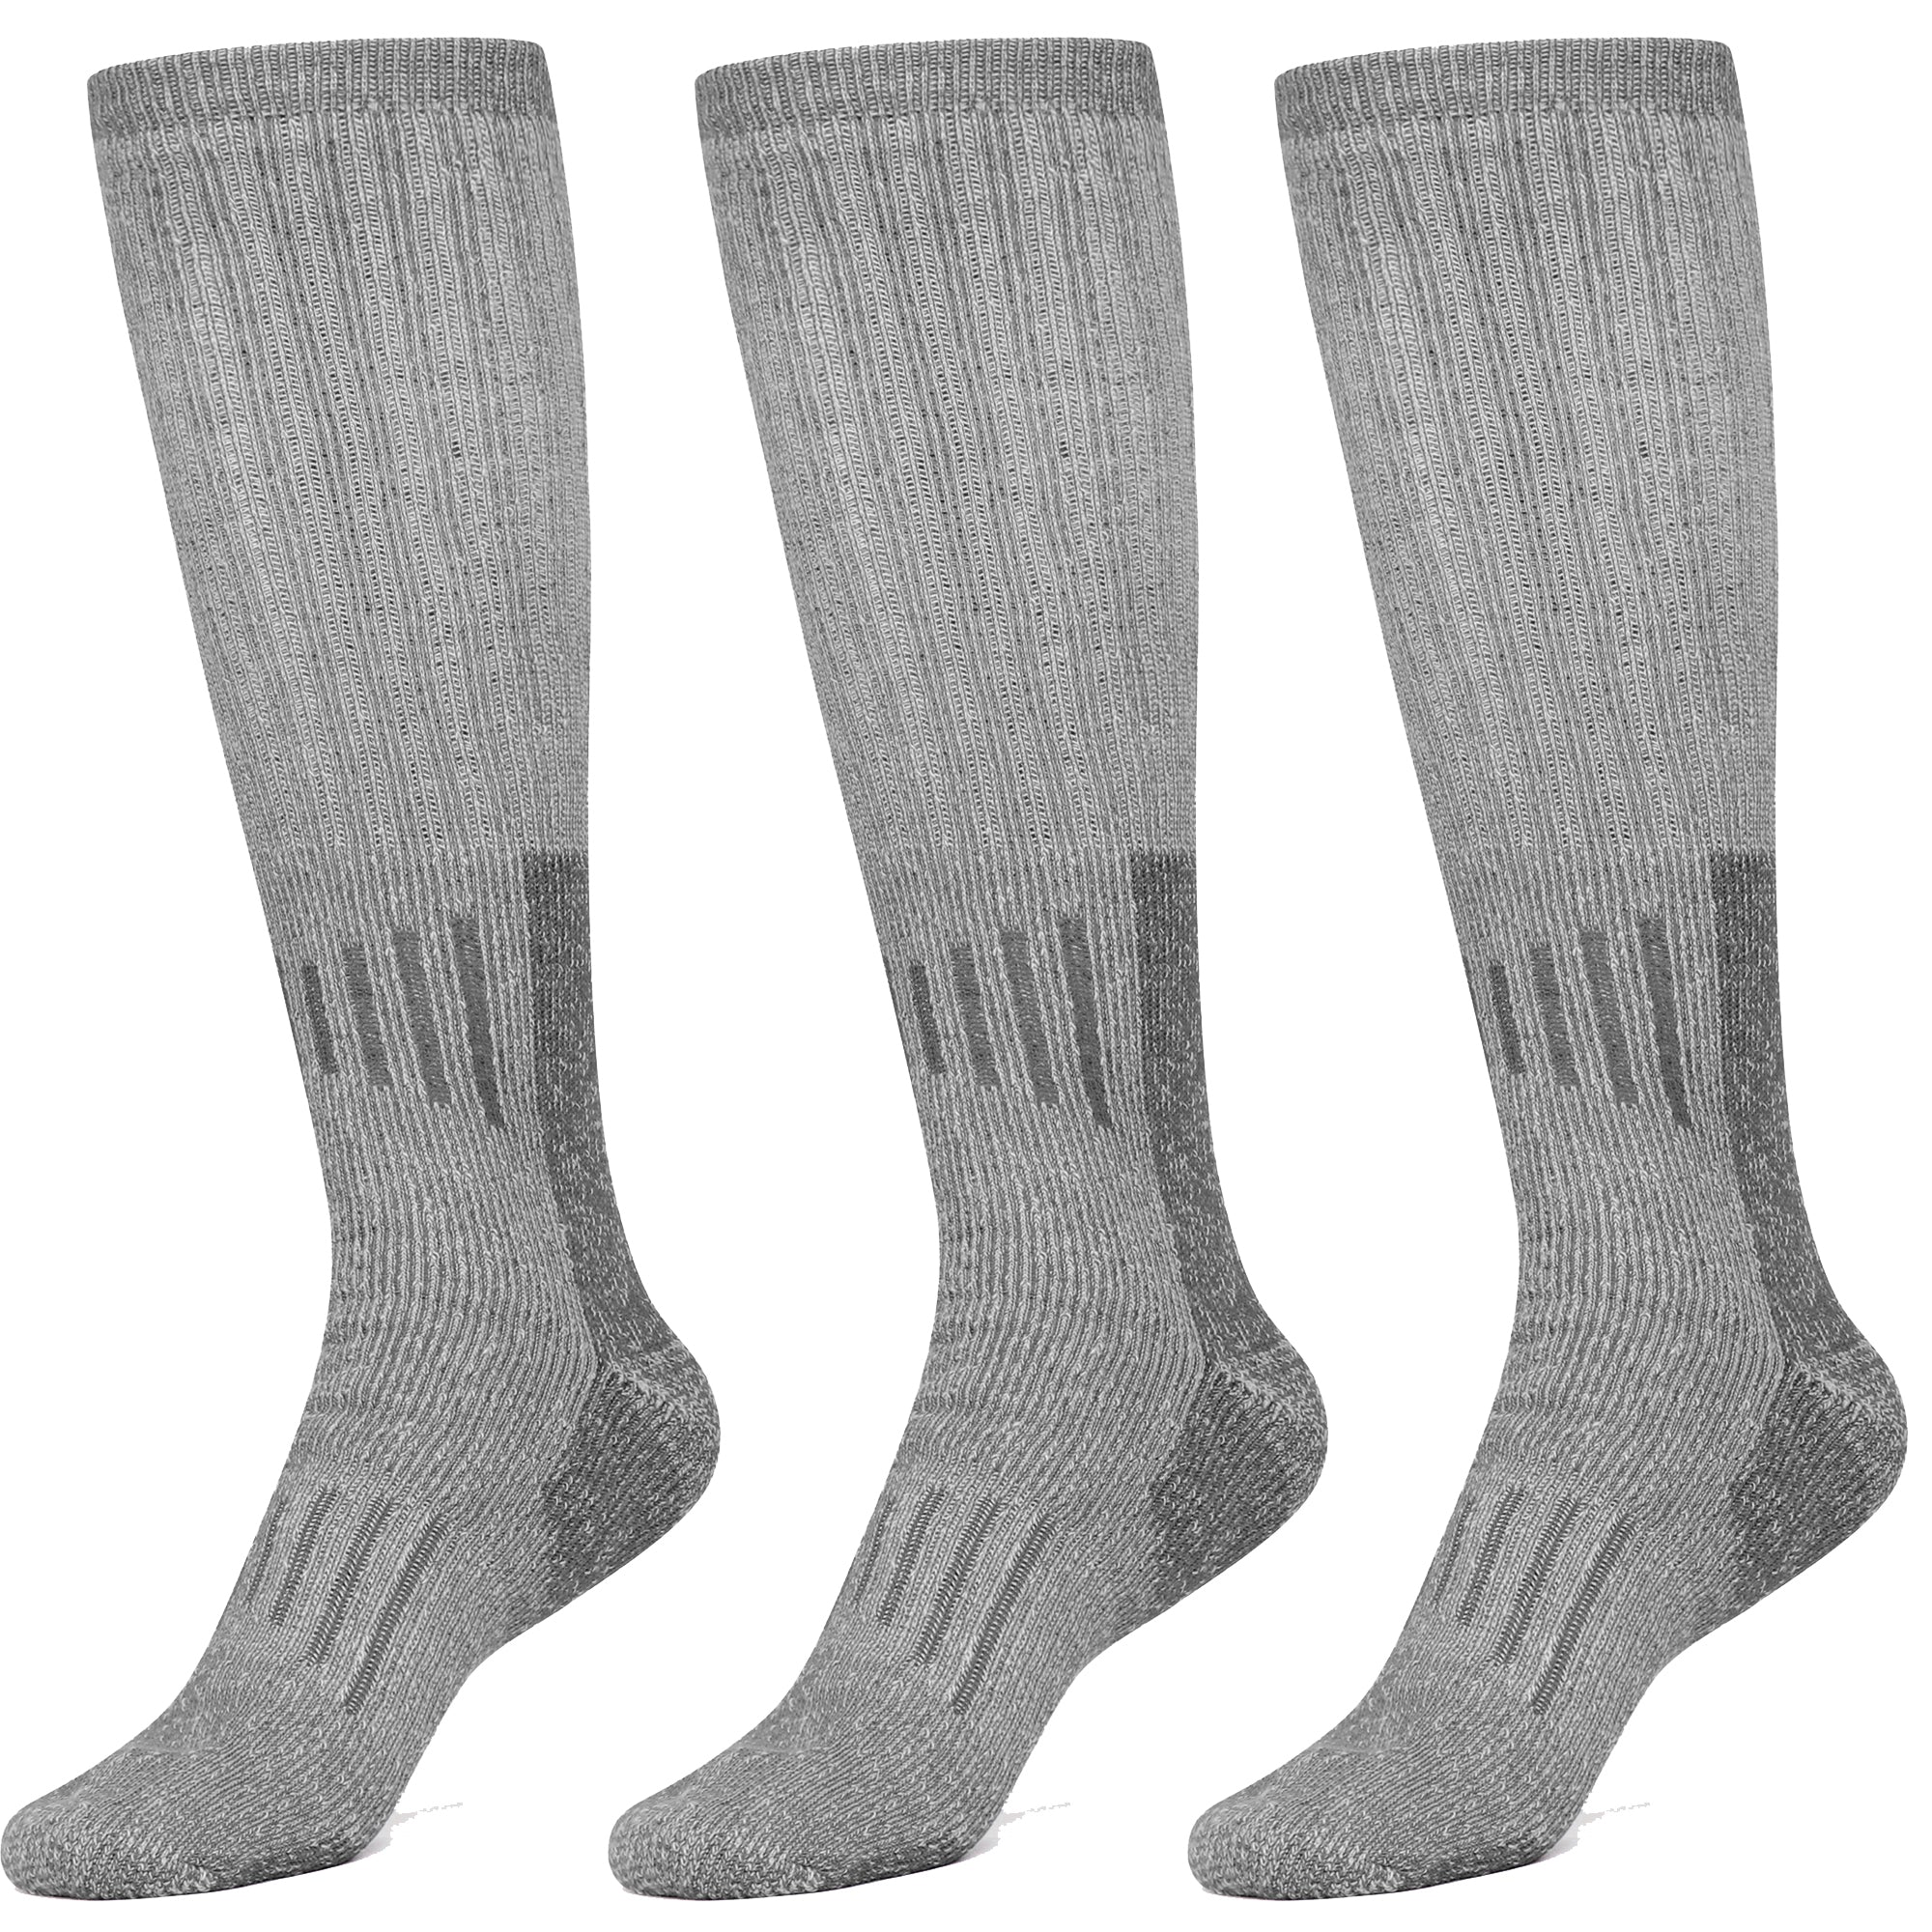 Boot Knee High Socks Merino Wool 80% Long Length 3 Pairs Shoe size 8-12